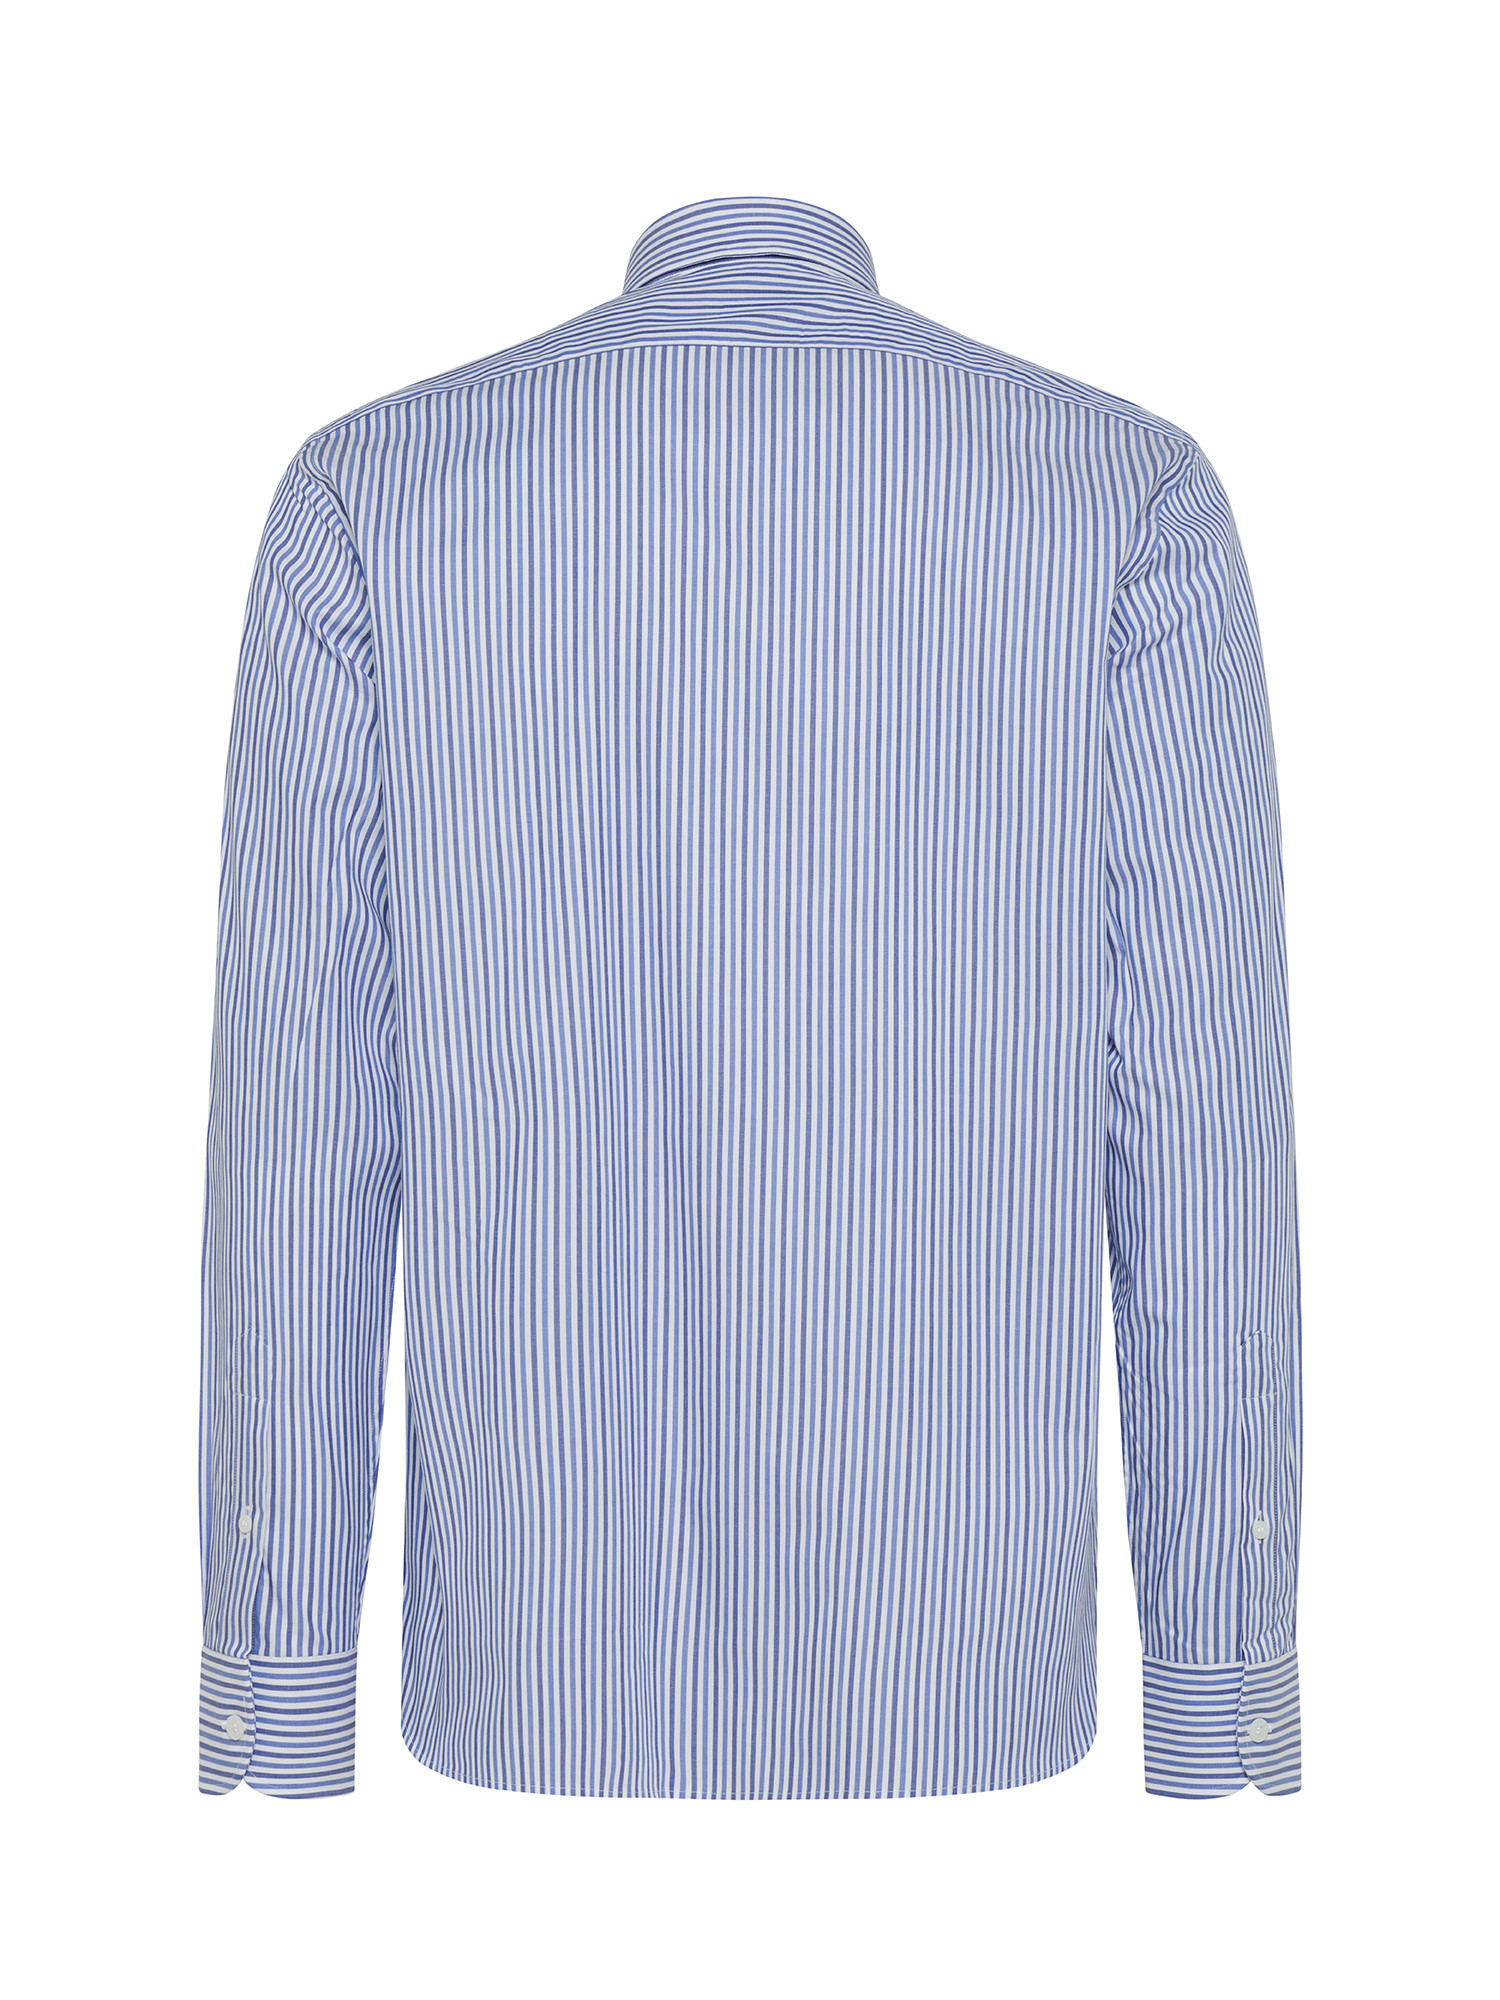 Luca D'Altieri - Tailor fit shirt in pure cotton, Blue, large image number 1